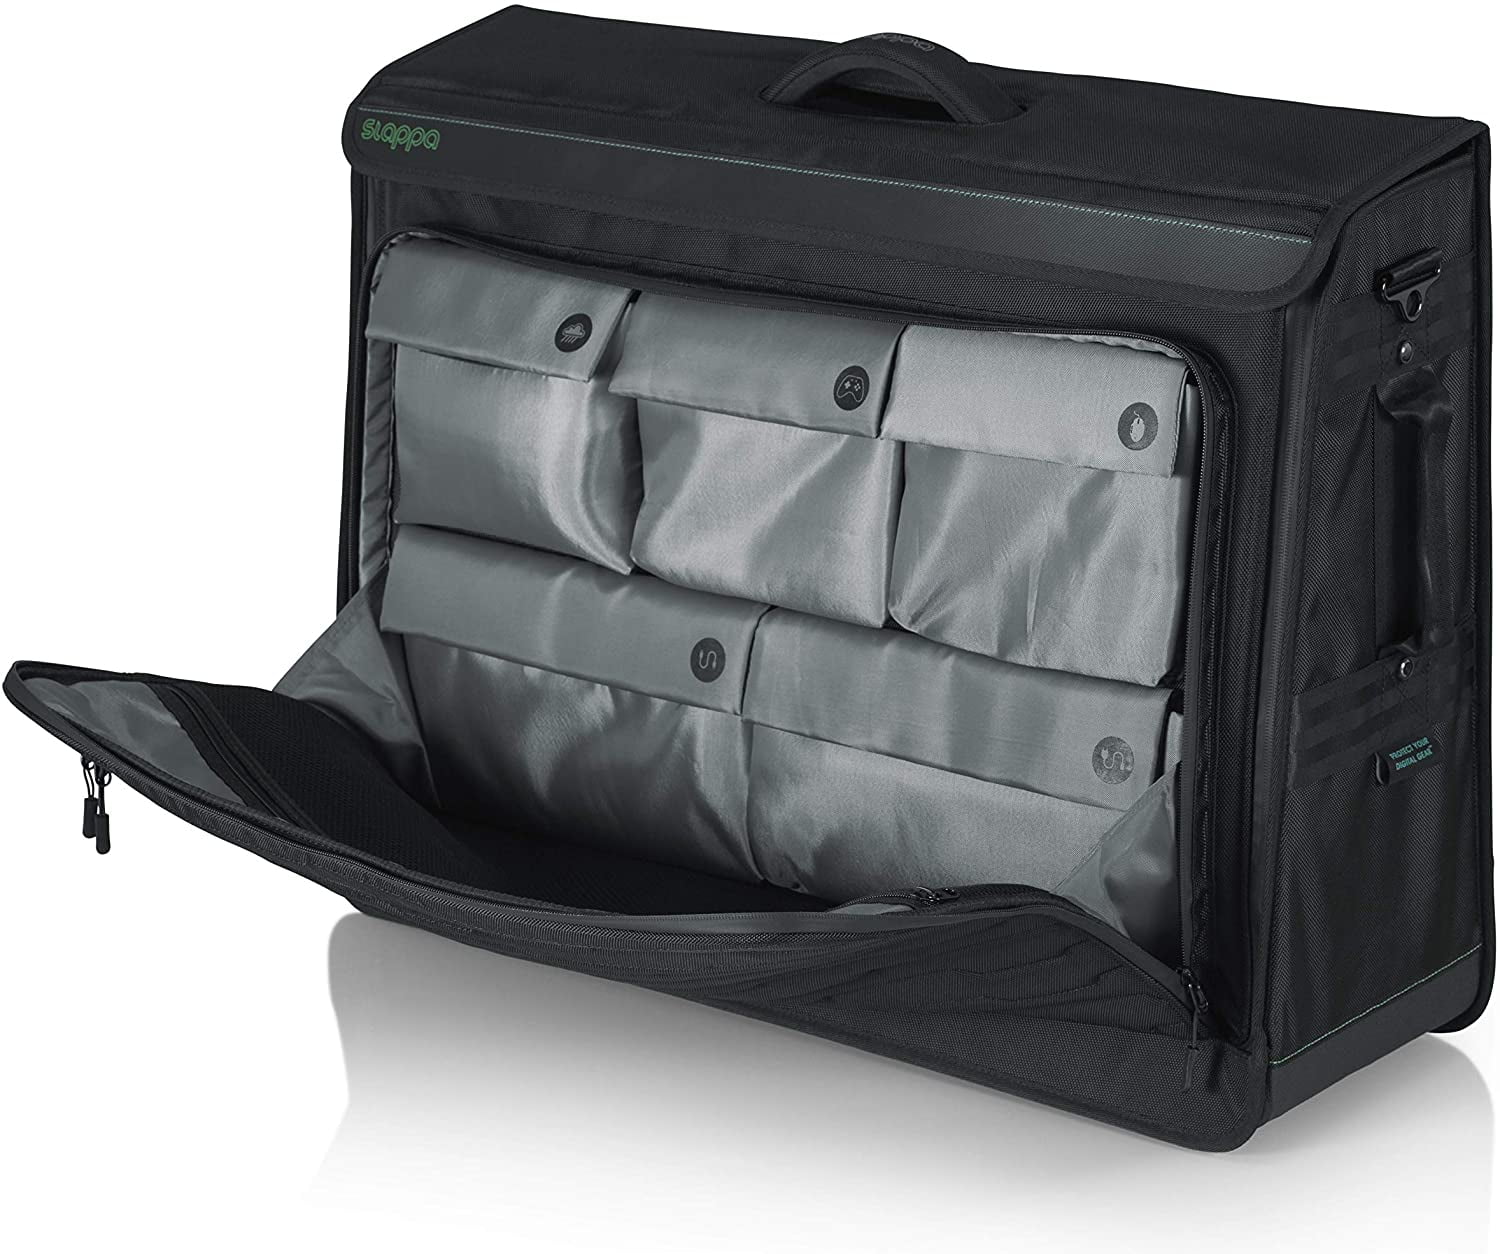 Slappa Flat Panel Monitor Tote Bag for 24-28 Screens